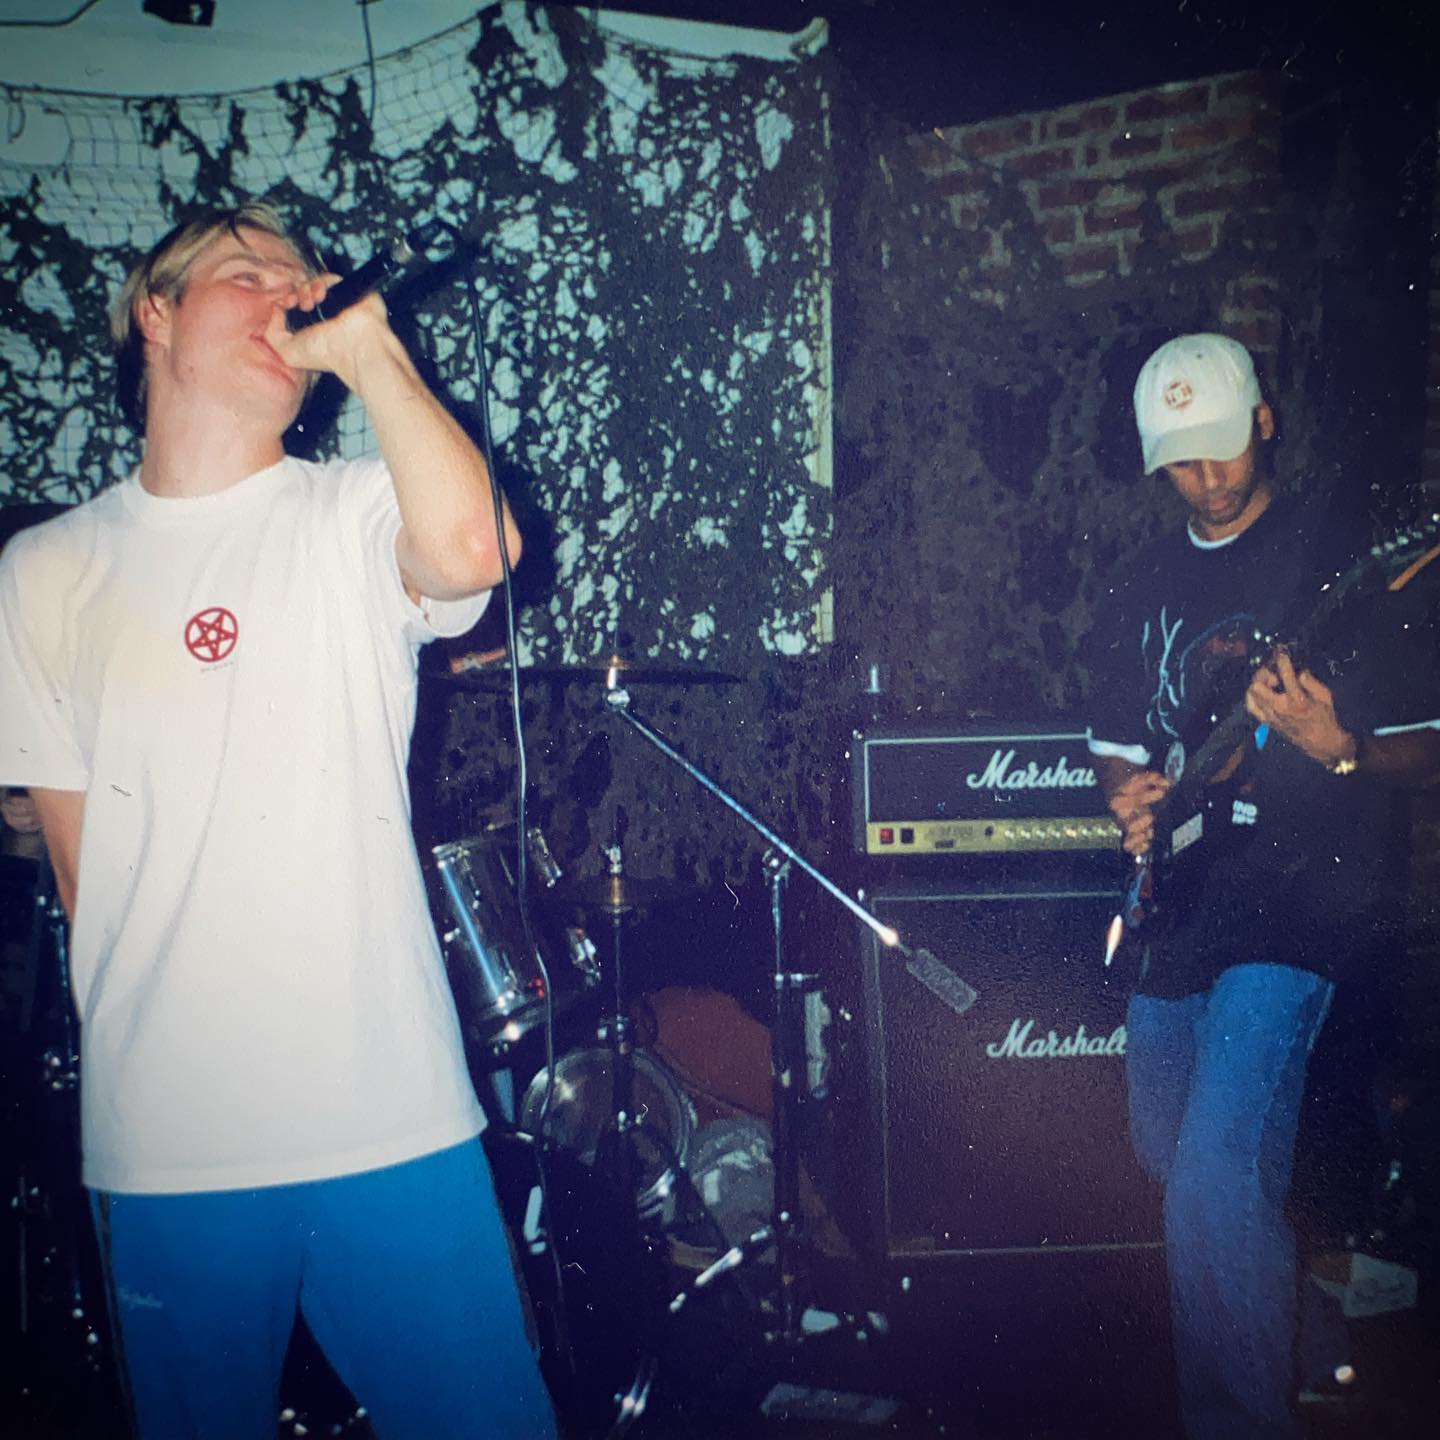 Miasmata - Tinck Hoogeveen (NL) - 18 October 1997 #hardcore #metal @xthreesomex #gigpic by @twentylandcrew